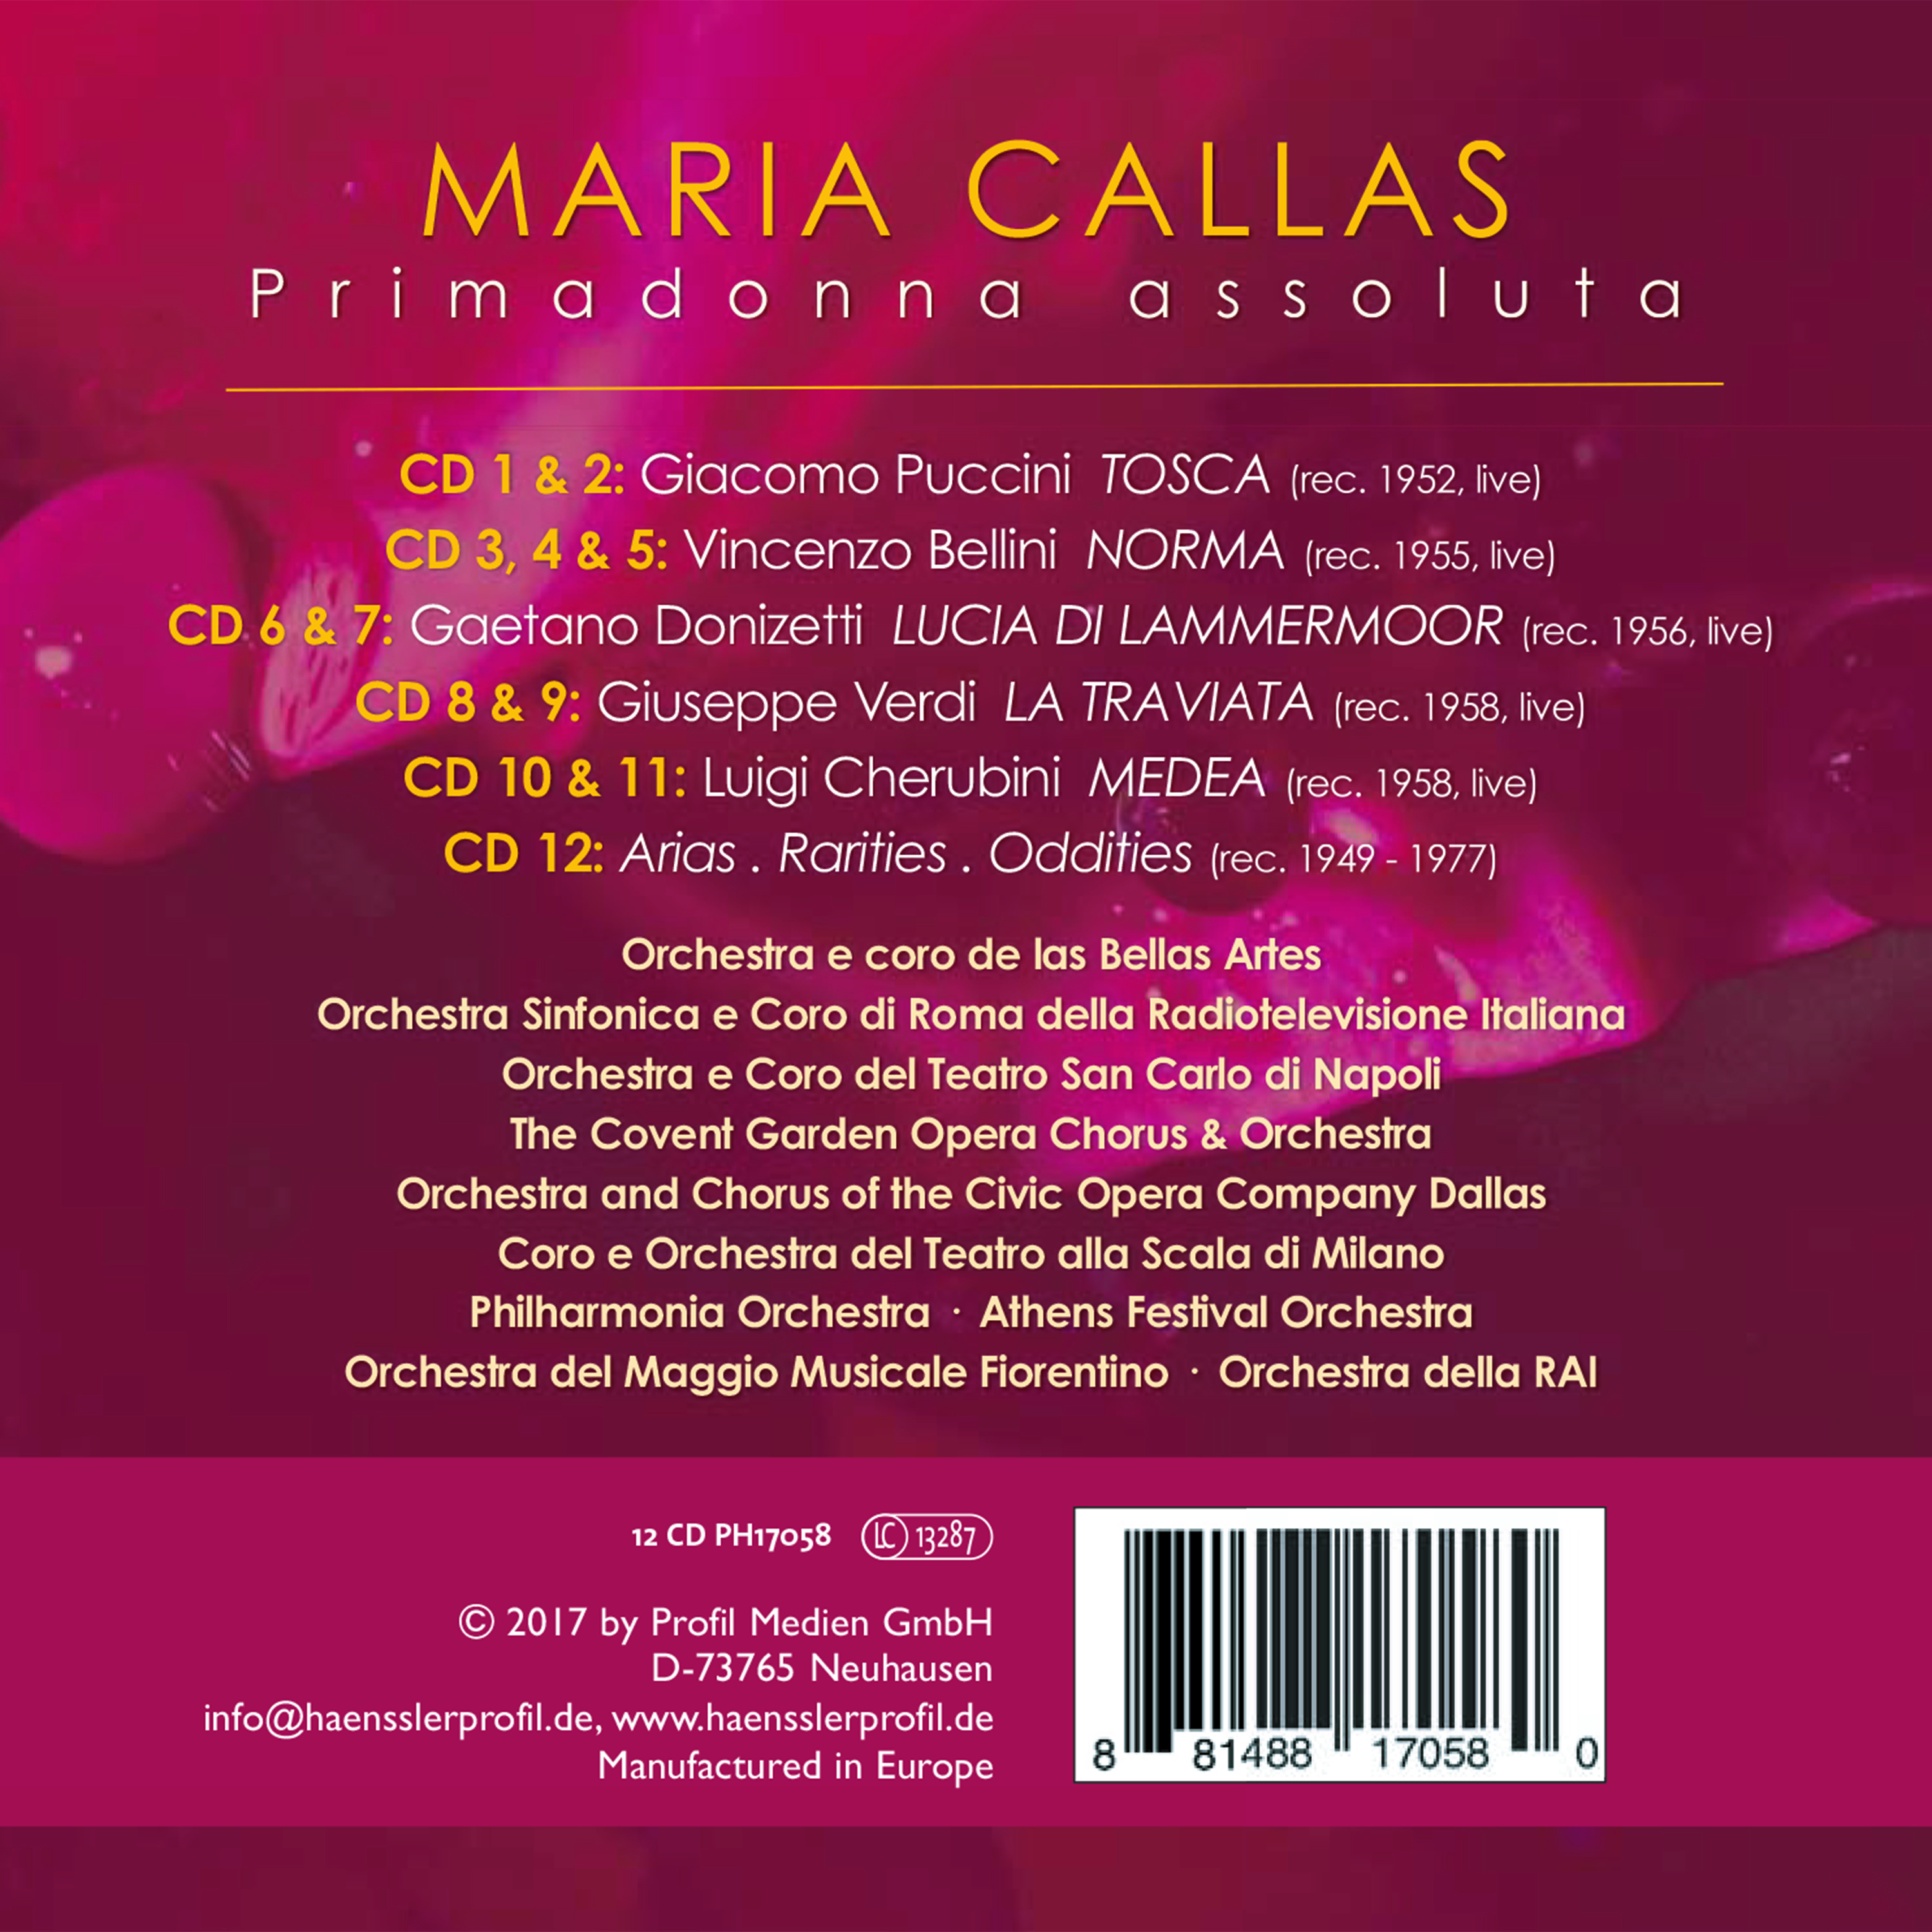 Maria Callas: Primadonna assoluta - slide-1